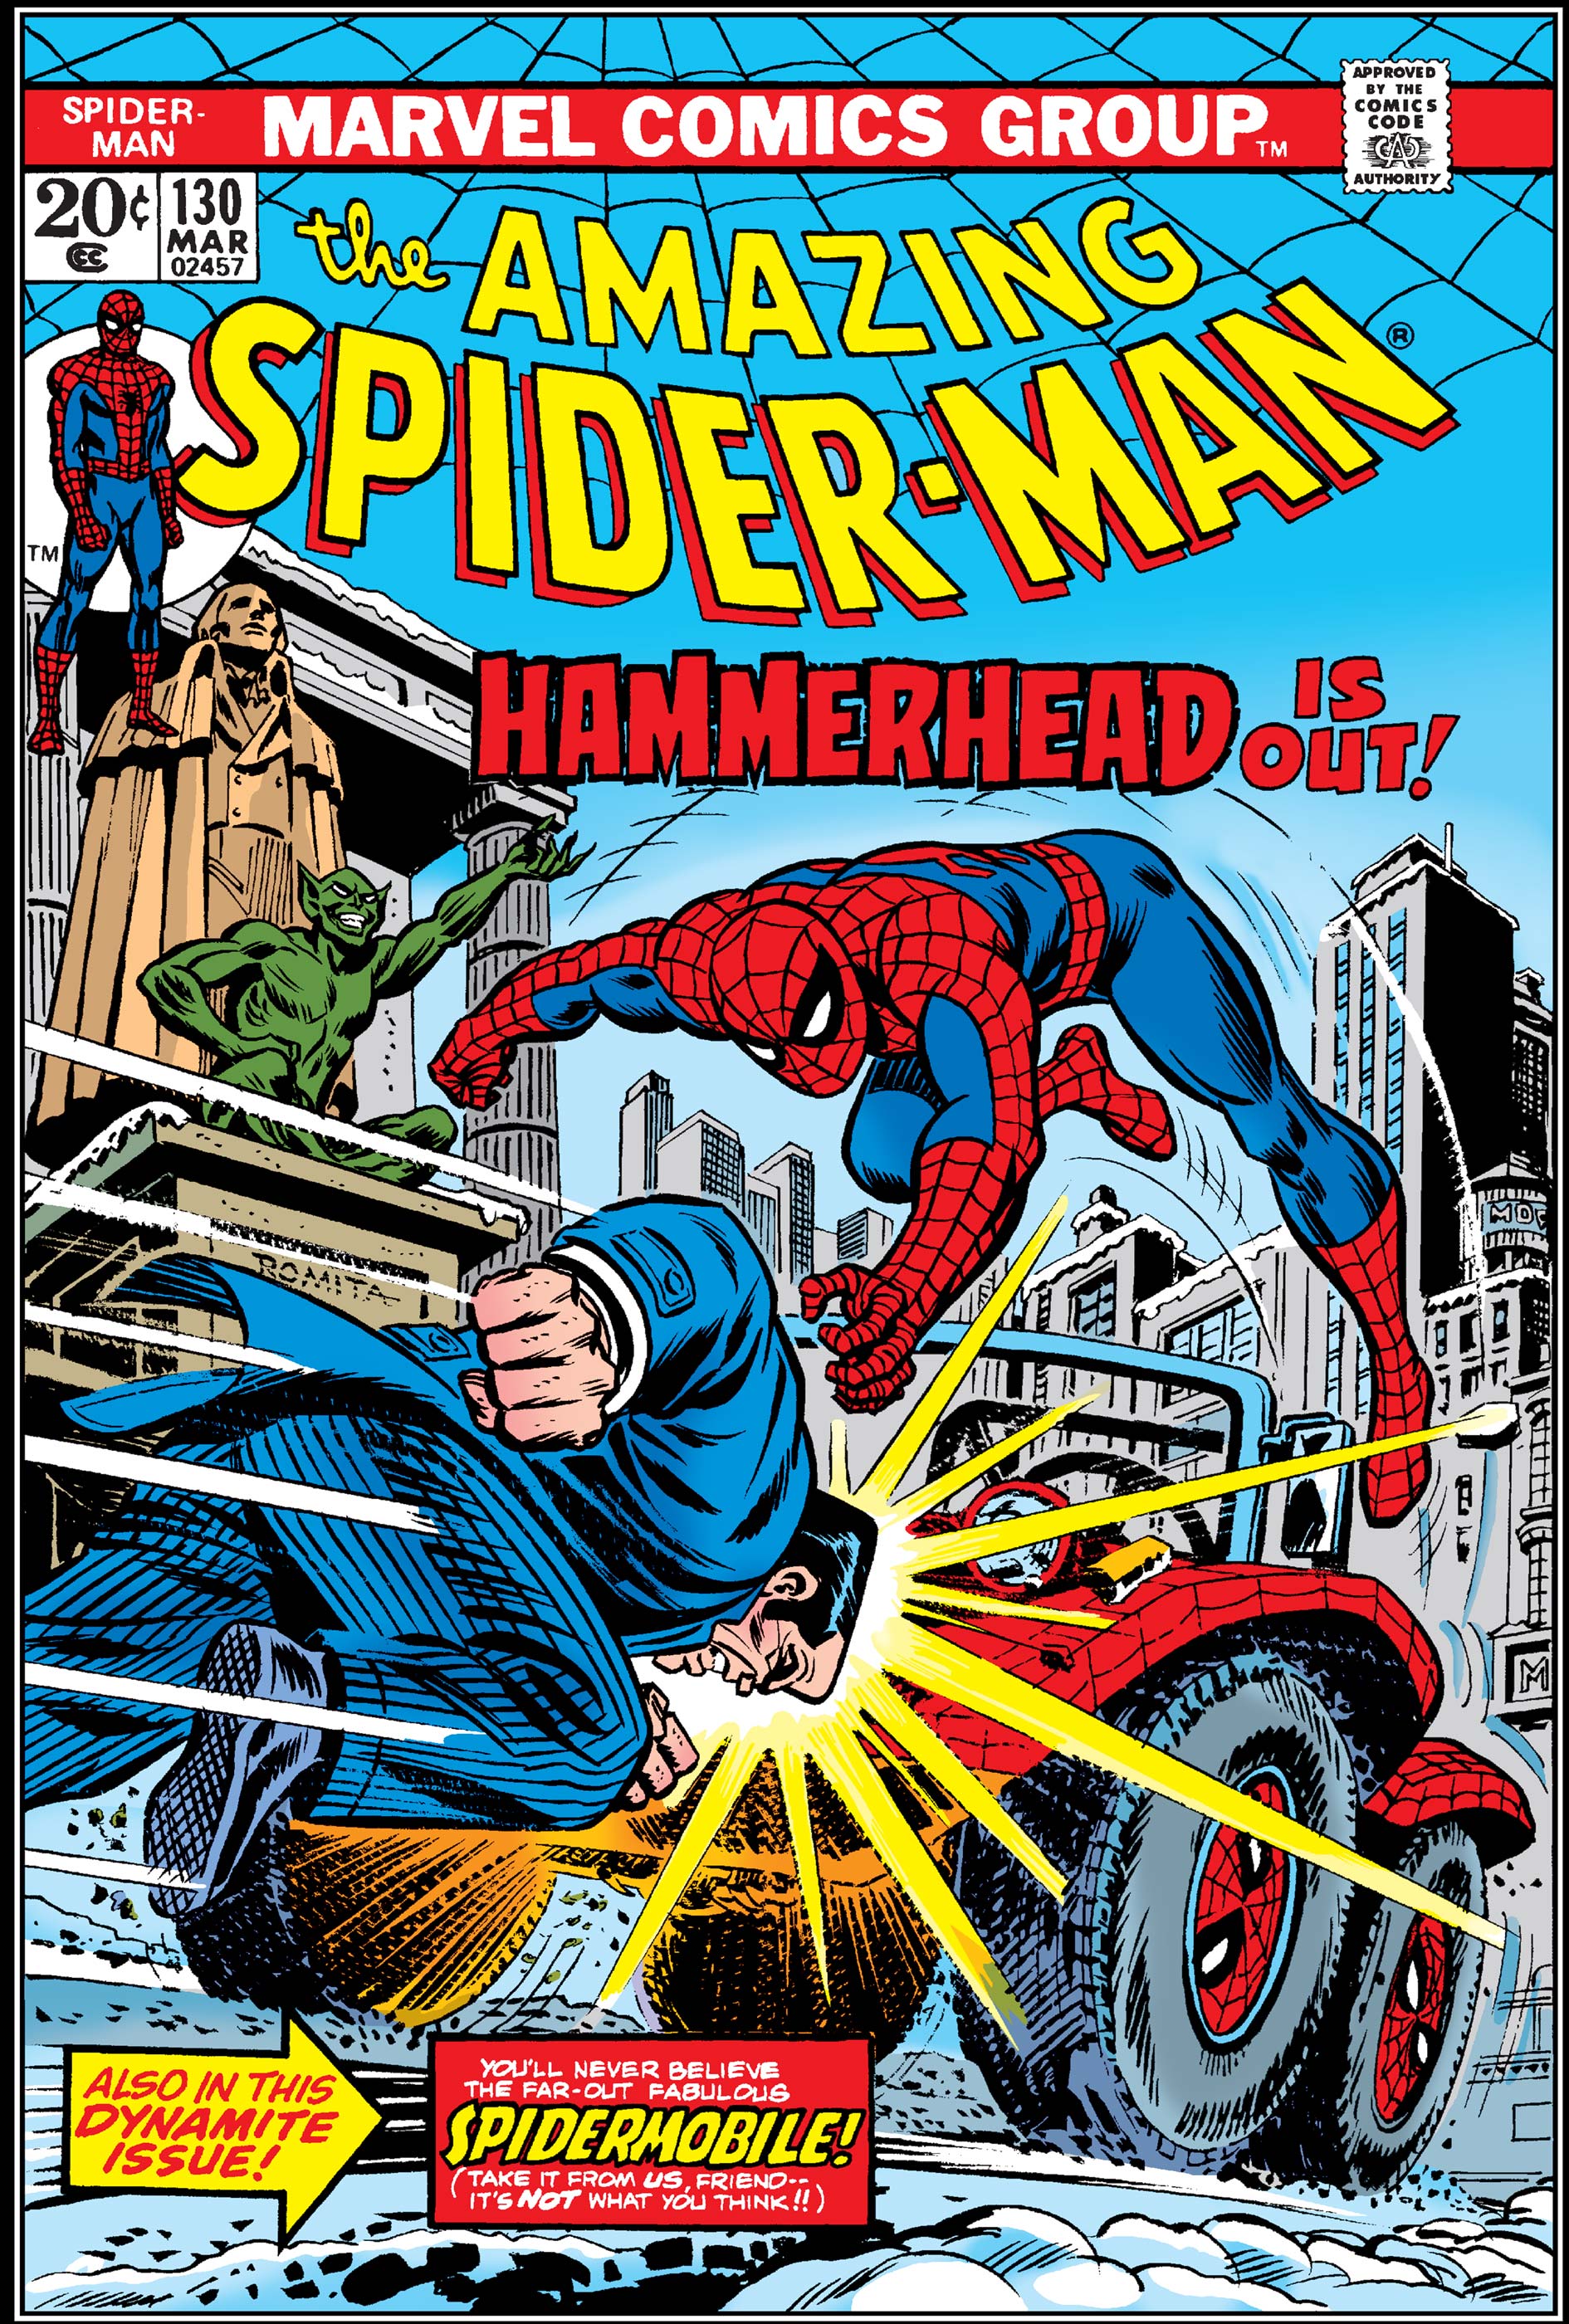 The Amazing Spider-Man (1963) #130